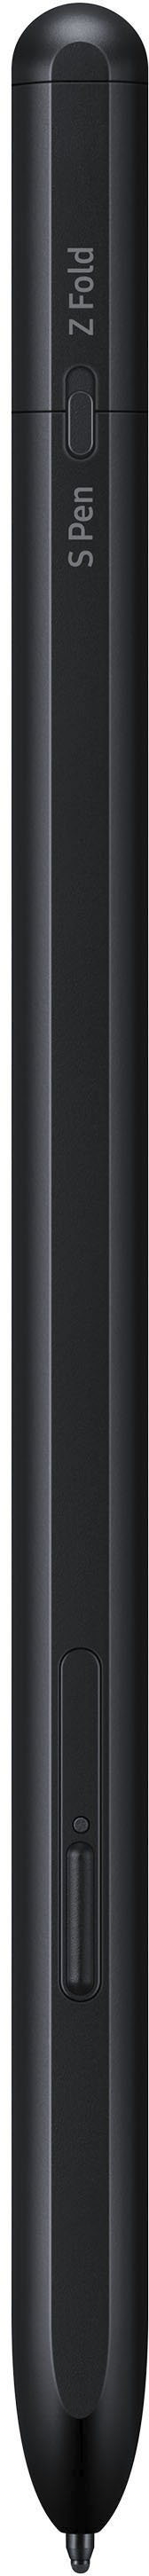 Best Buy: Samsung S Pen Pro Black EJ-P5450SBEGUS